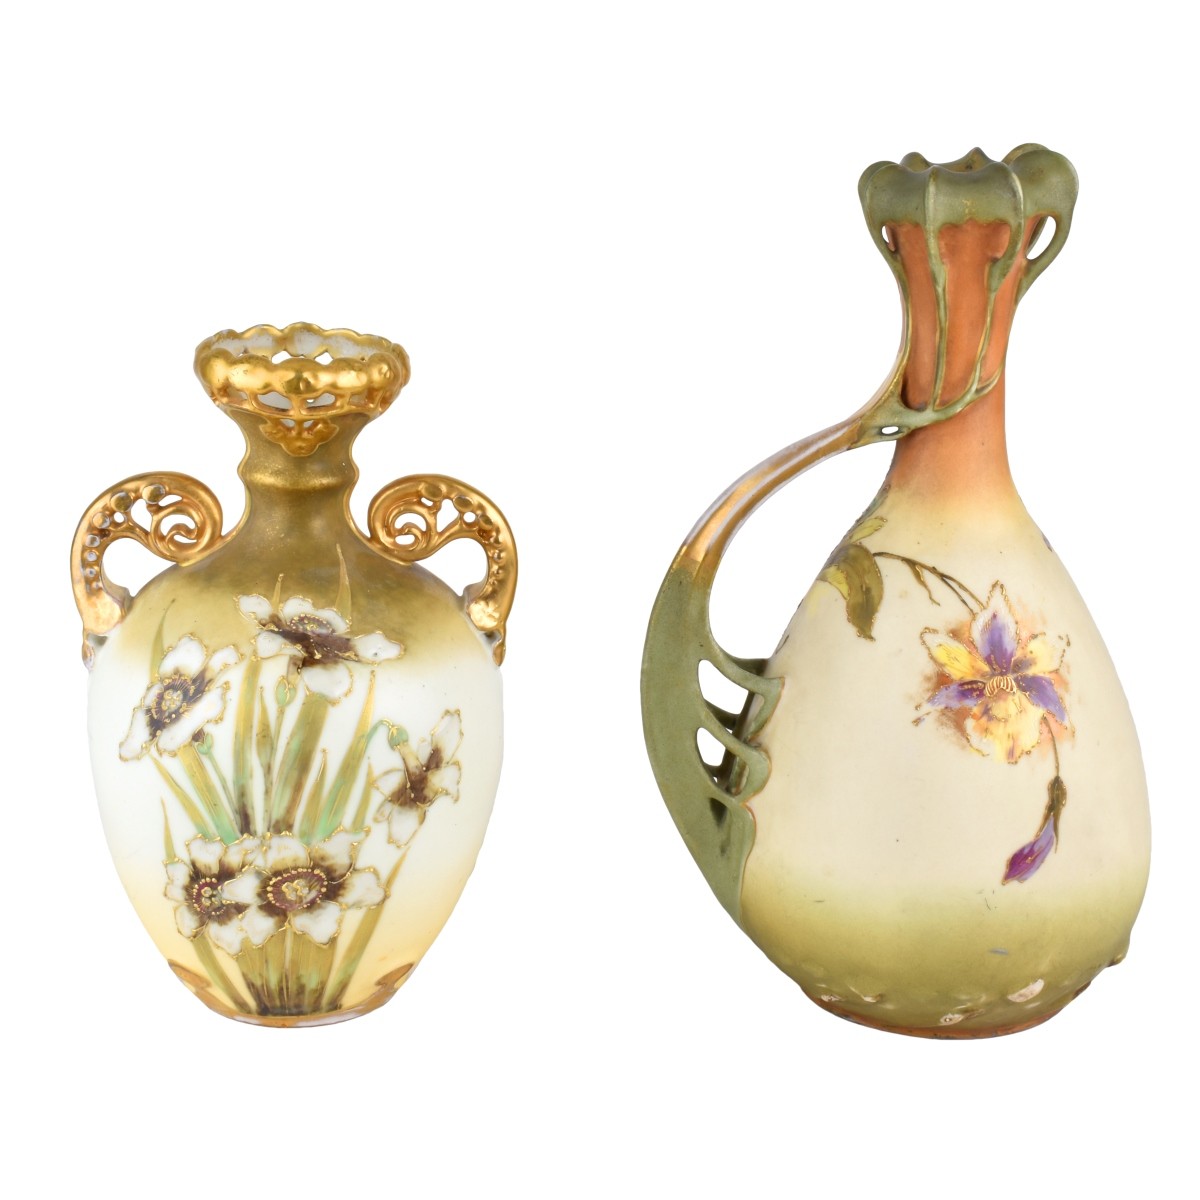 Turn Teplitz Pottery Ewer and Vase